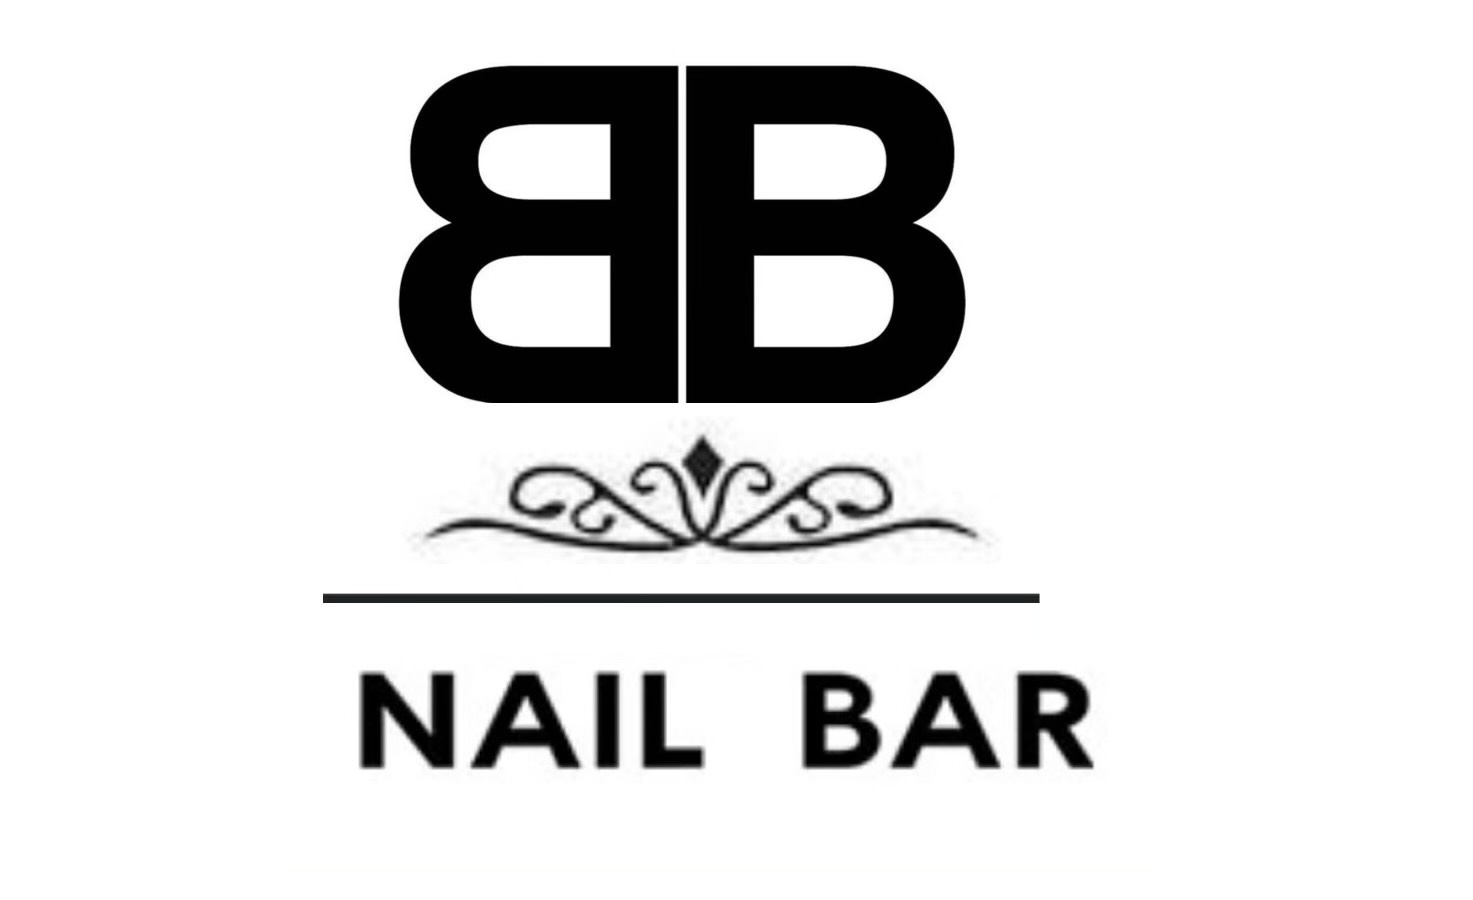 1. The Nail Bar - wide 3